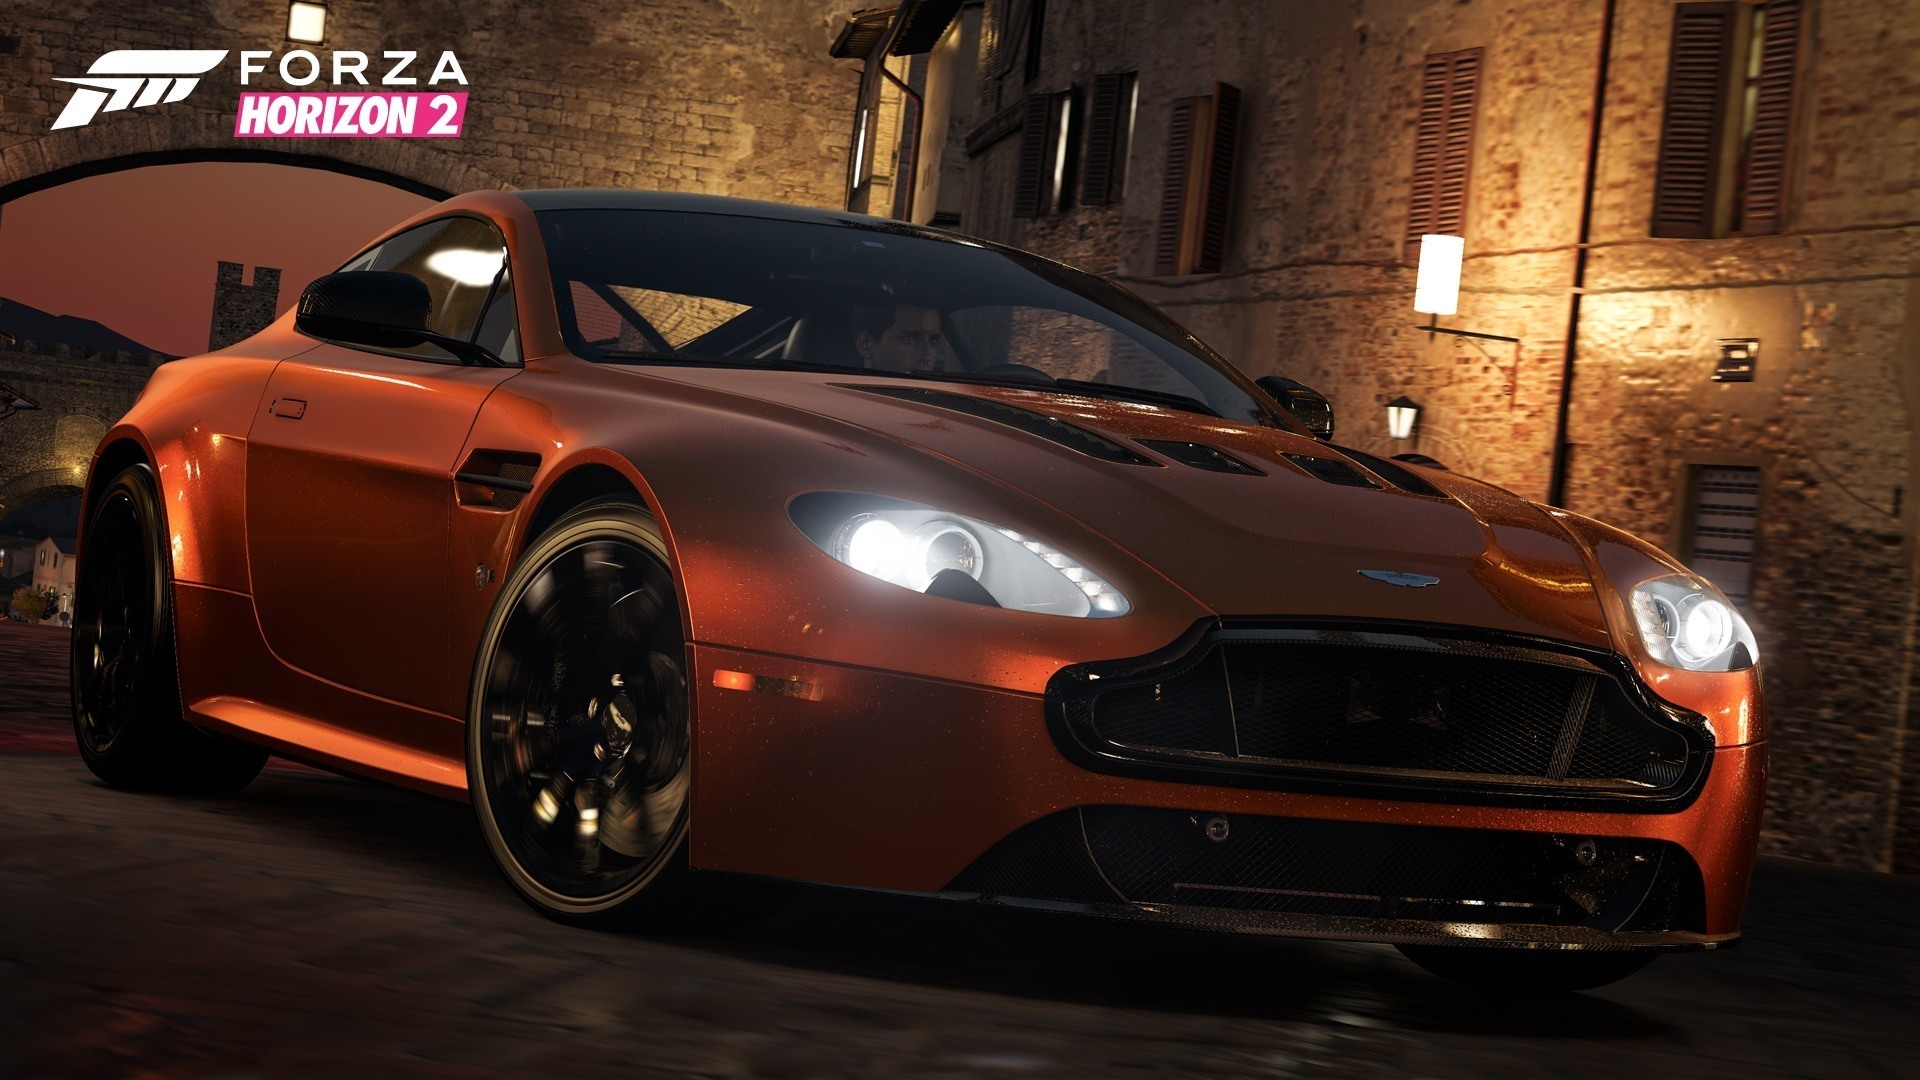 Forza Motorsport 6 - IGN